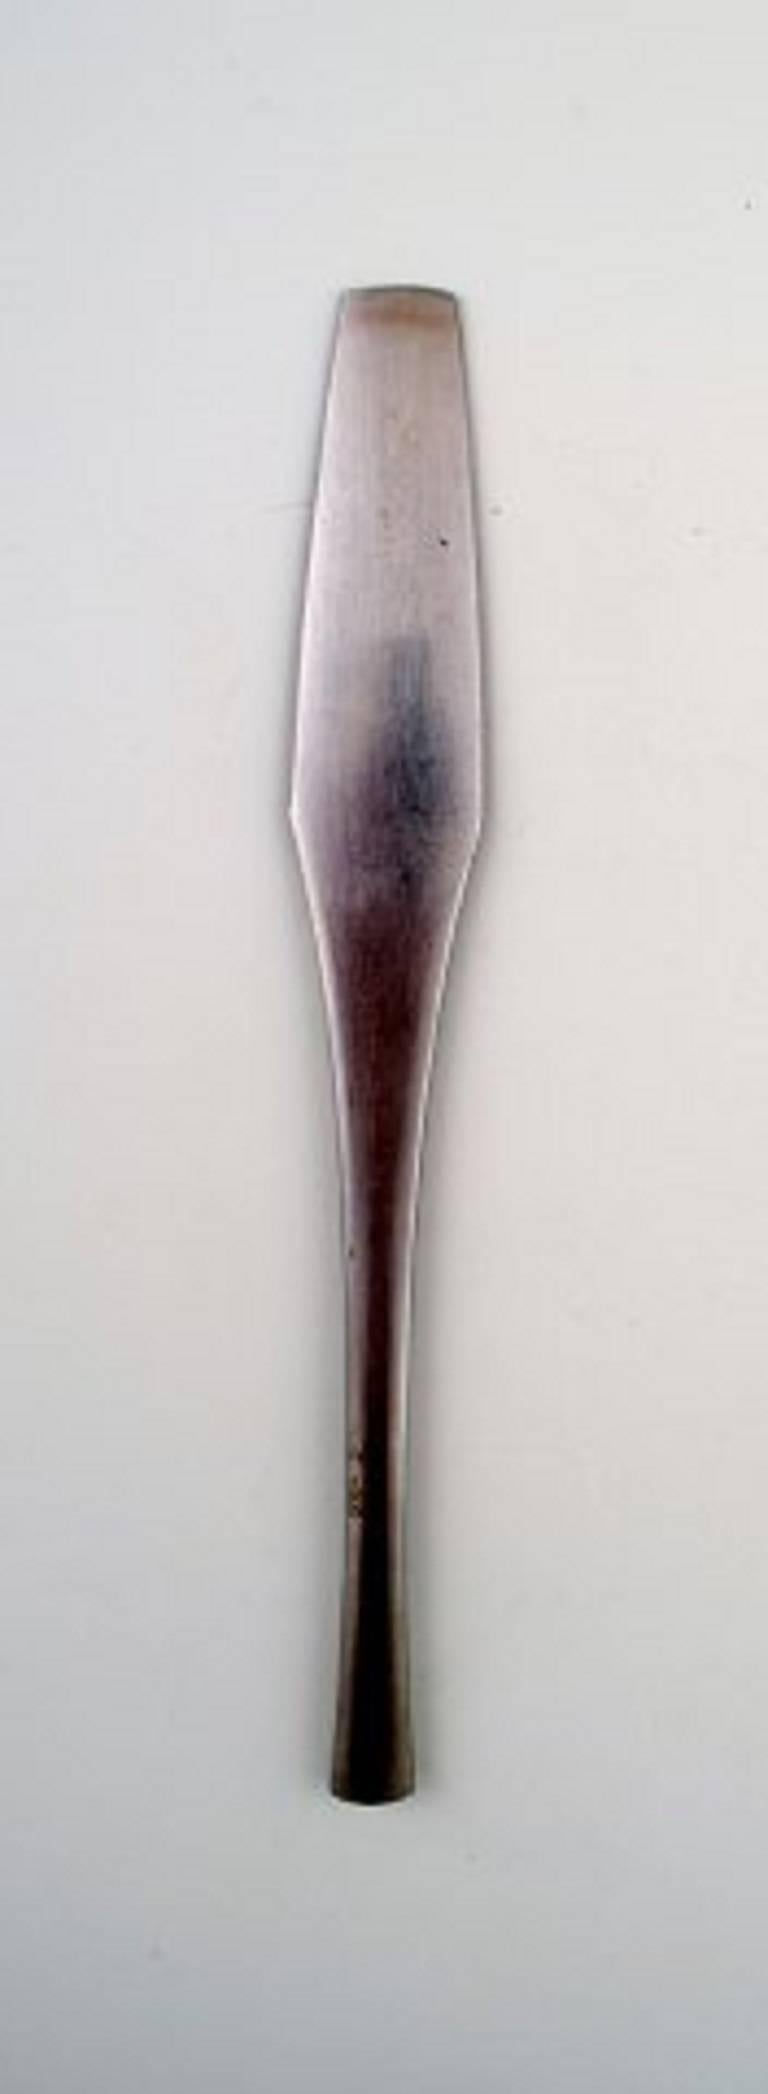 Scandinavian Modern Jens Quistgaard Odin Cutlery for Danish Designs, Stainless Steel